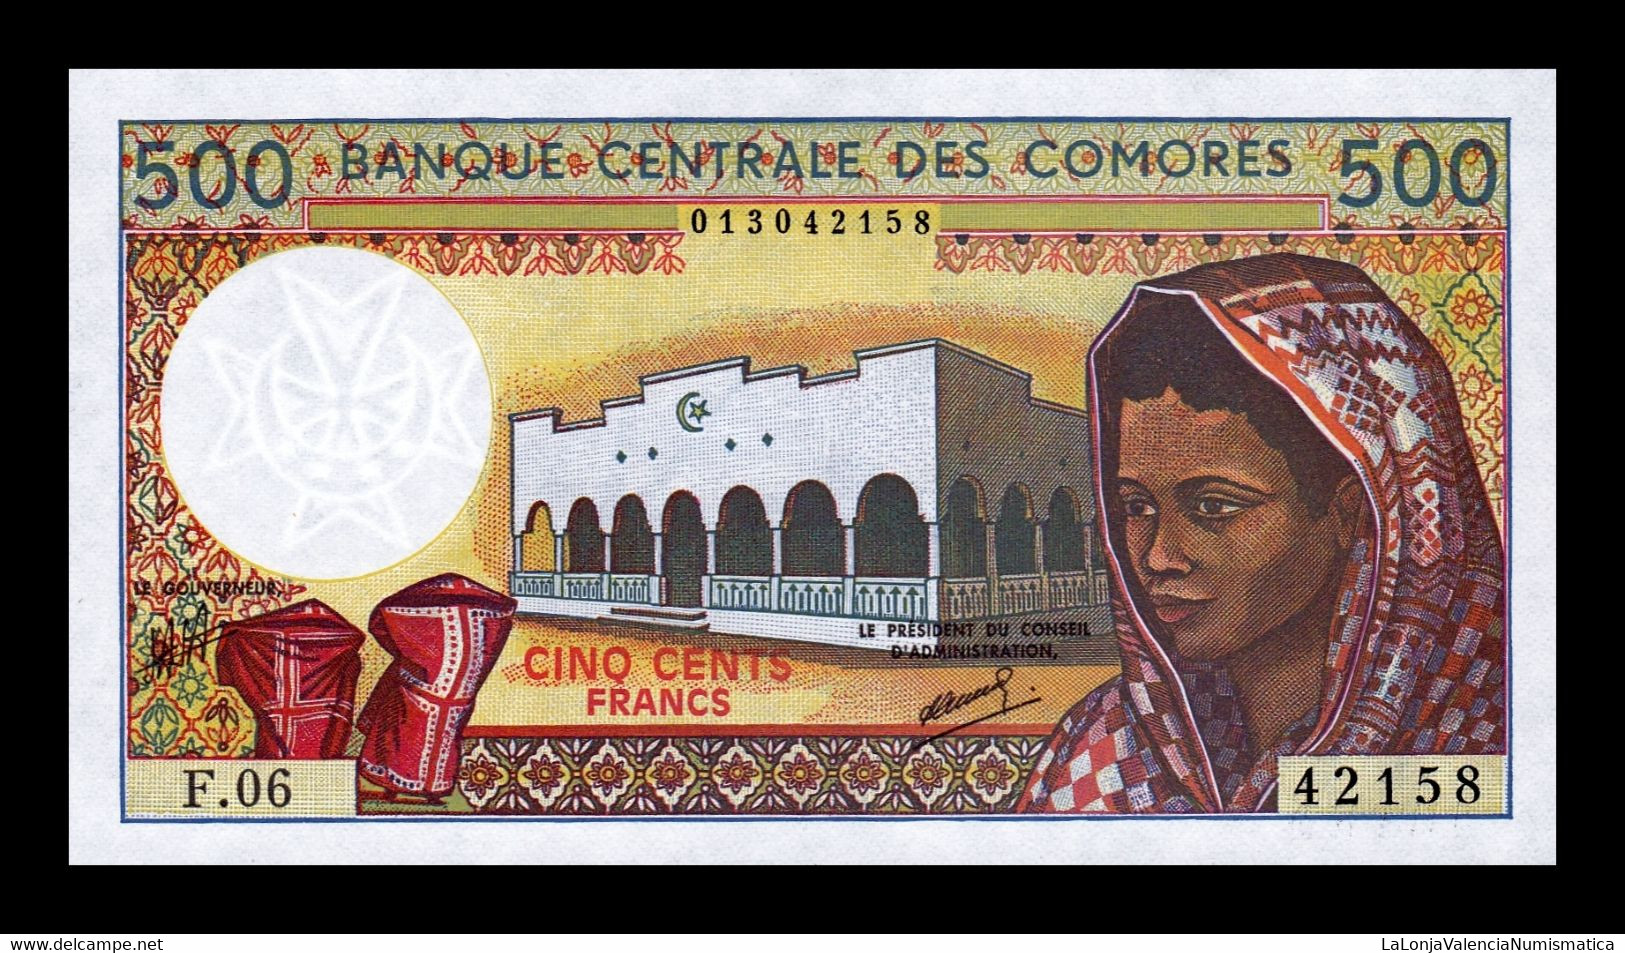 Comores Comoros 500 Francs 1984-2004 Pick 10b(2) SC UNC - Komoren